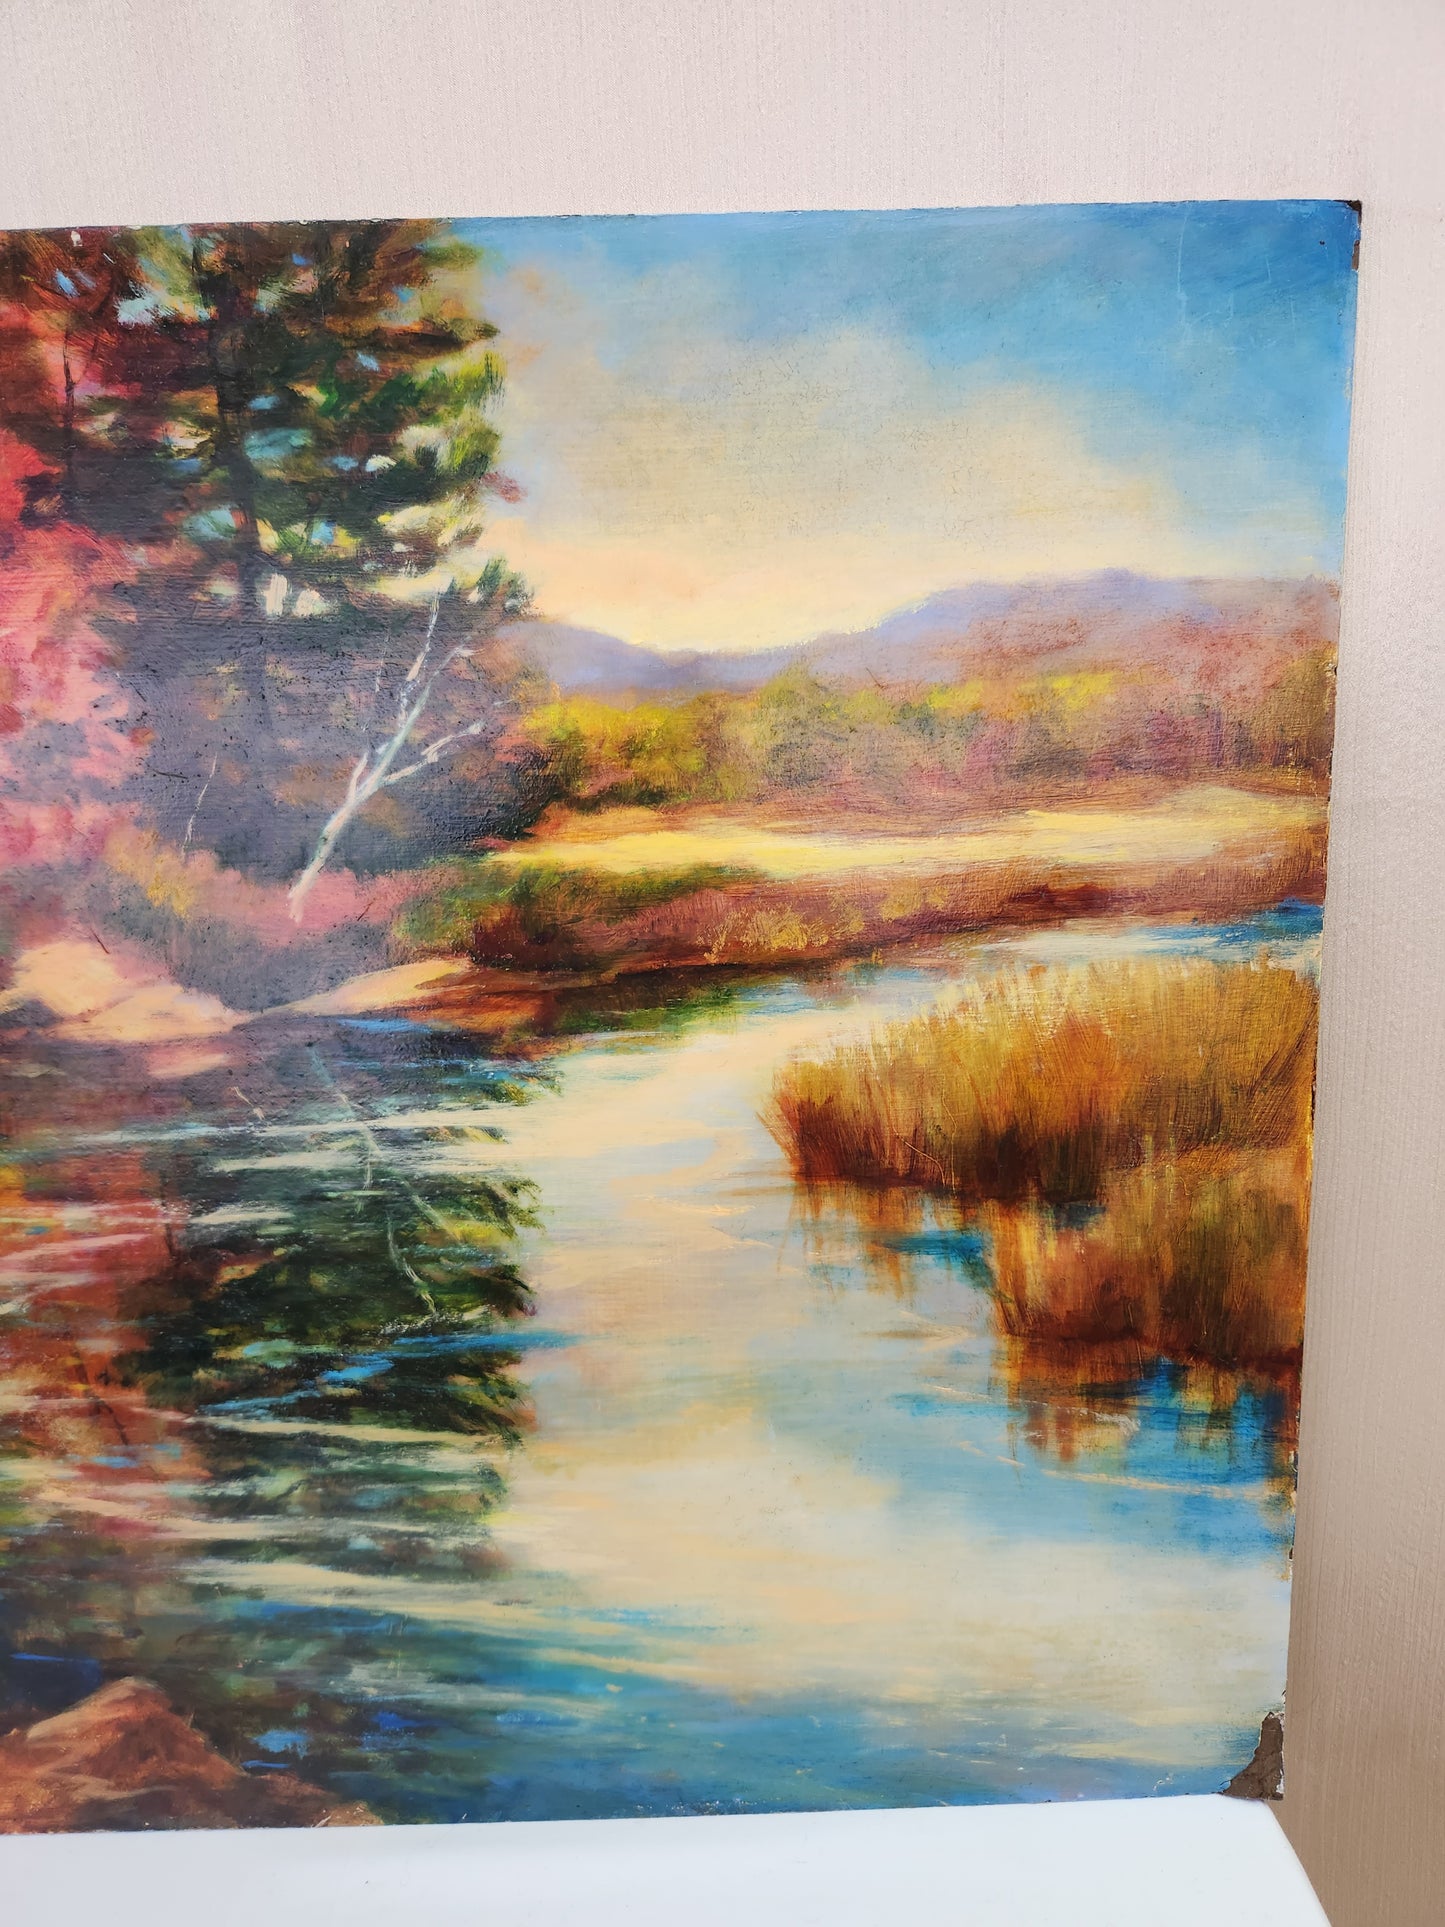 VTG - Karen Schmitz oil painting on hardboard "October Reflections" (slight damage)